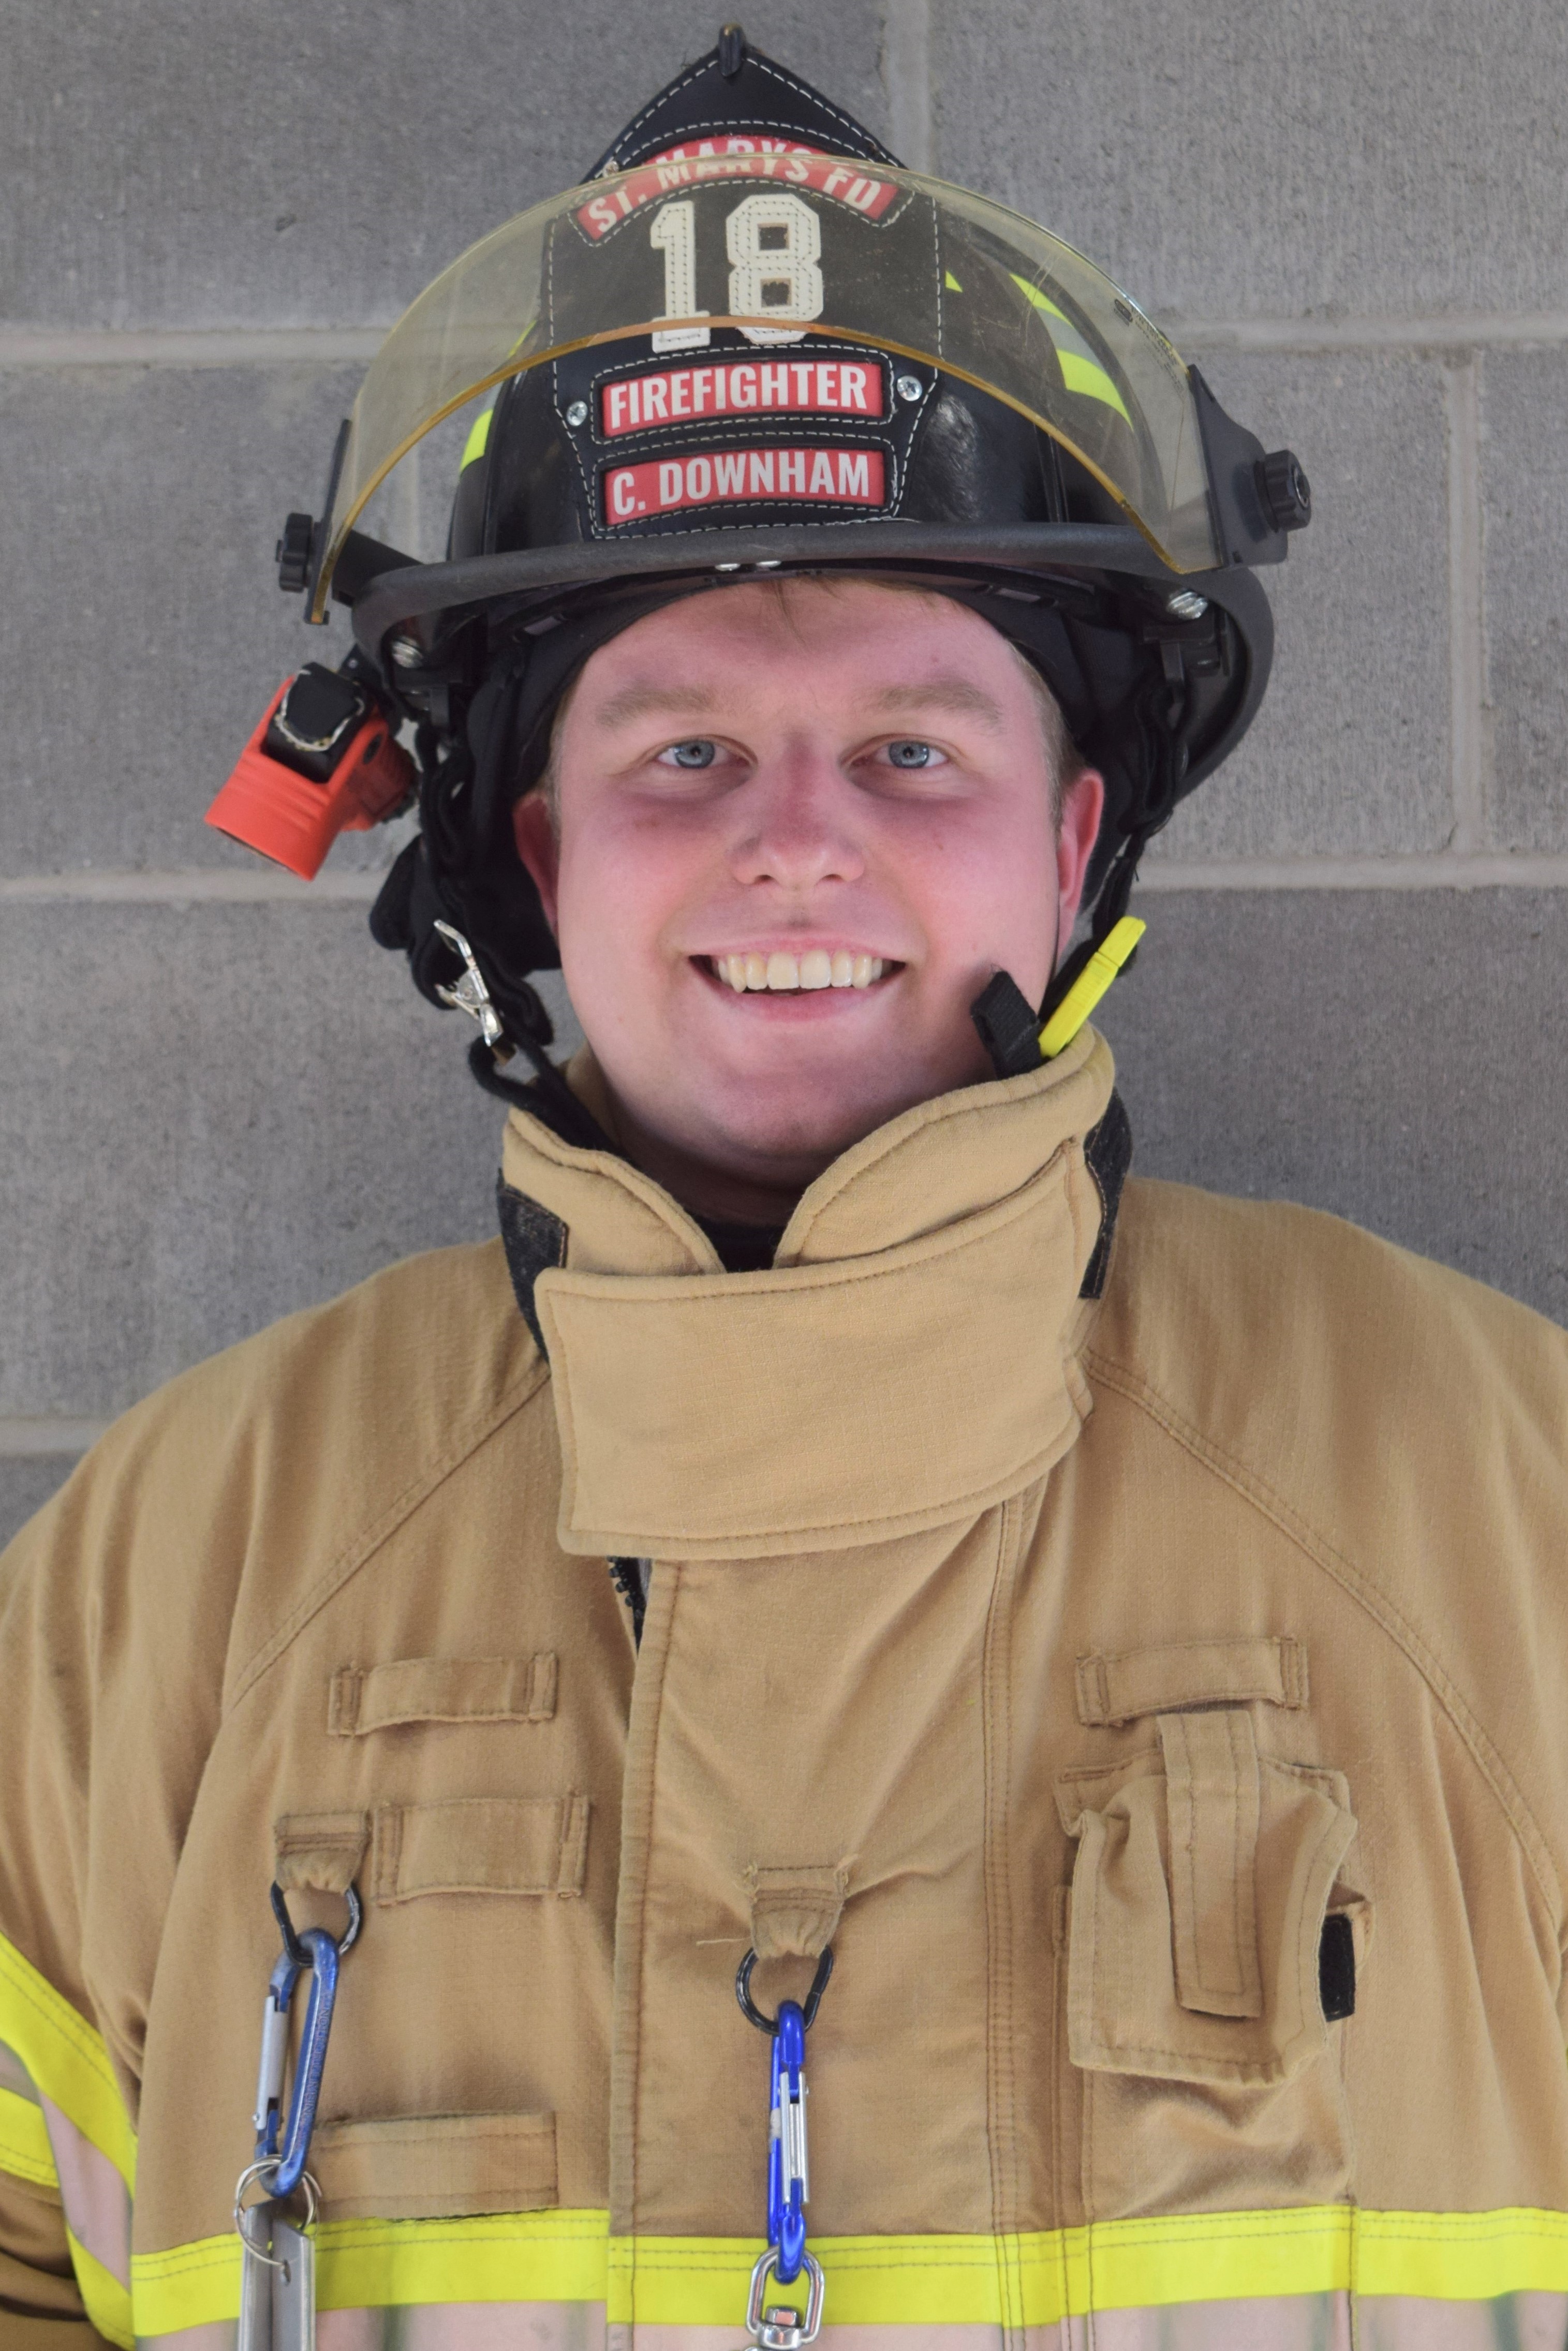 Curtis Downham Firefighter